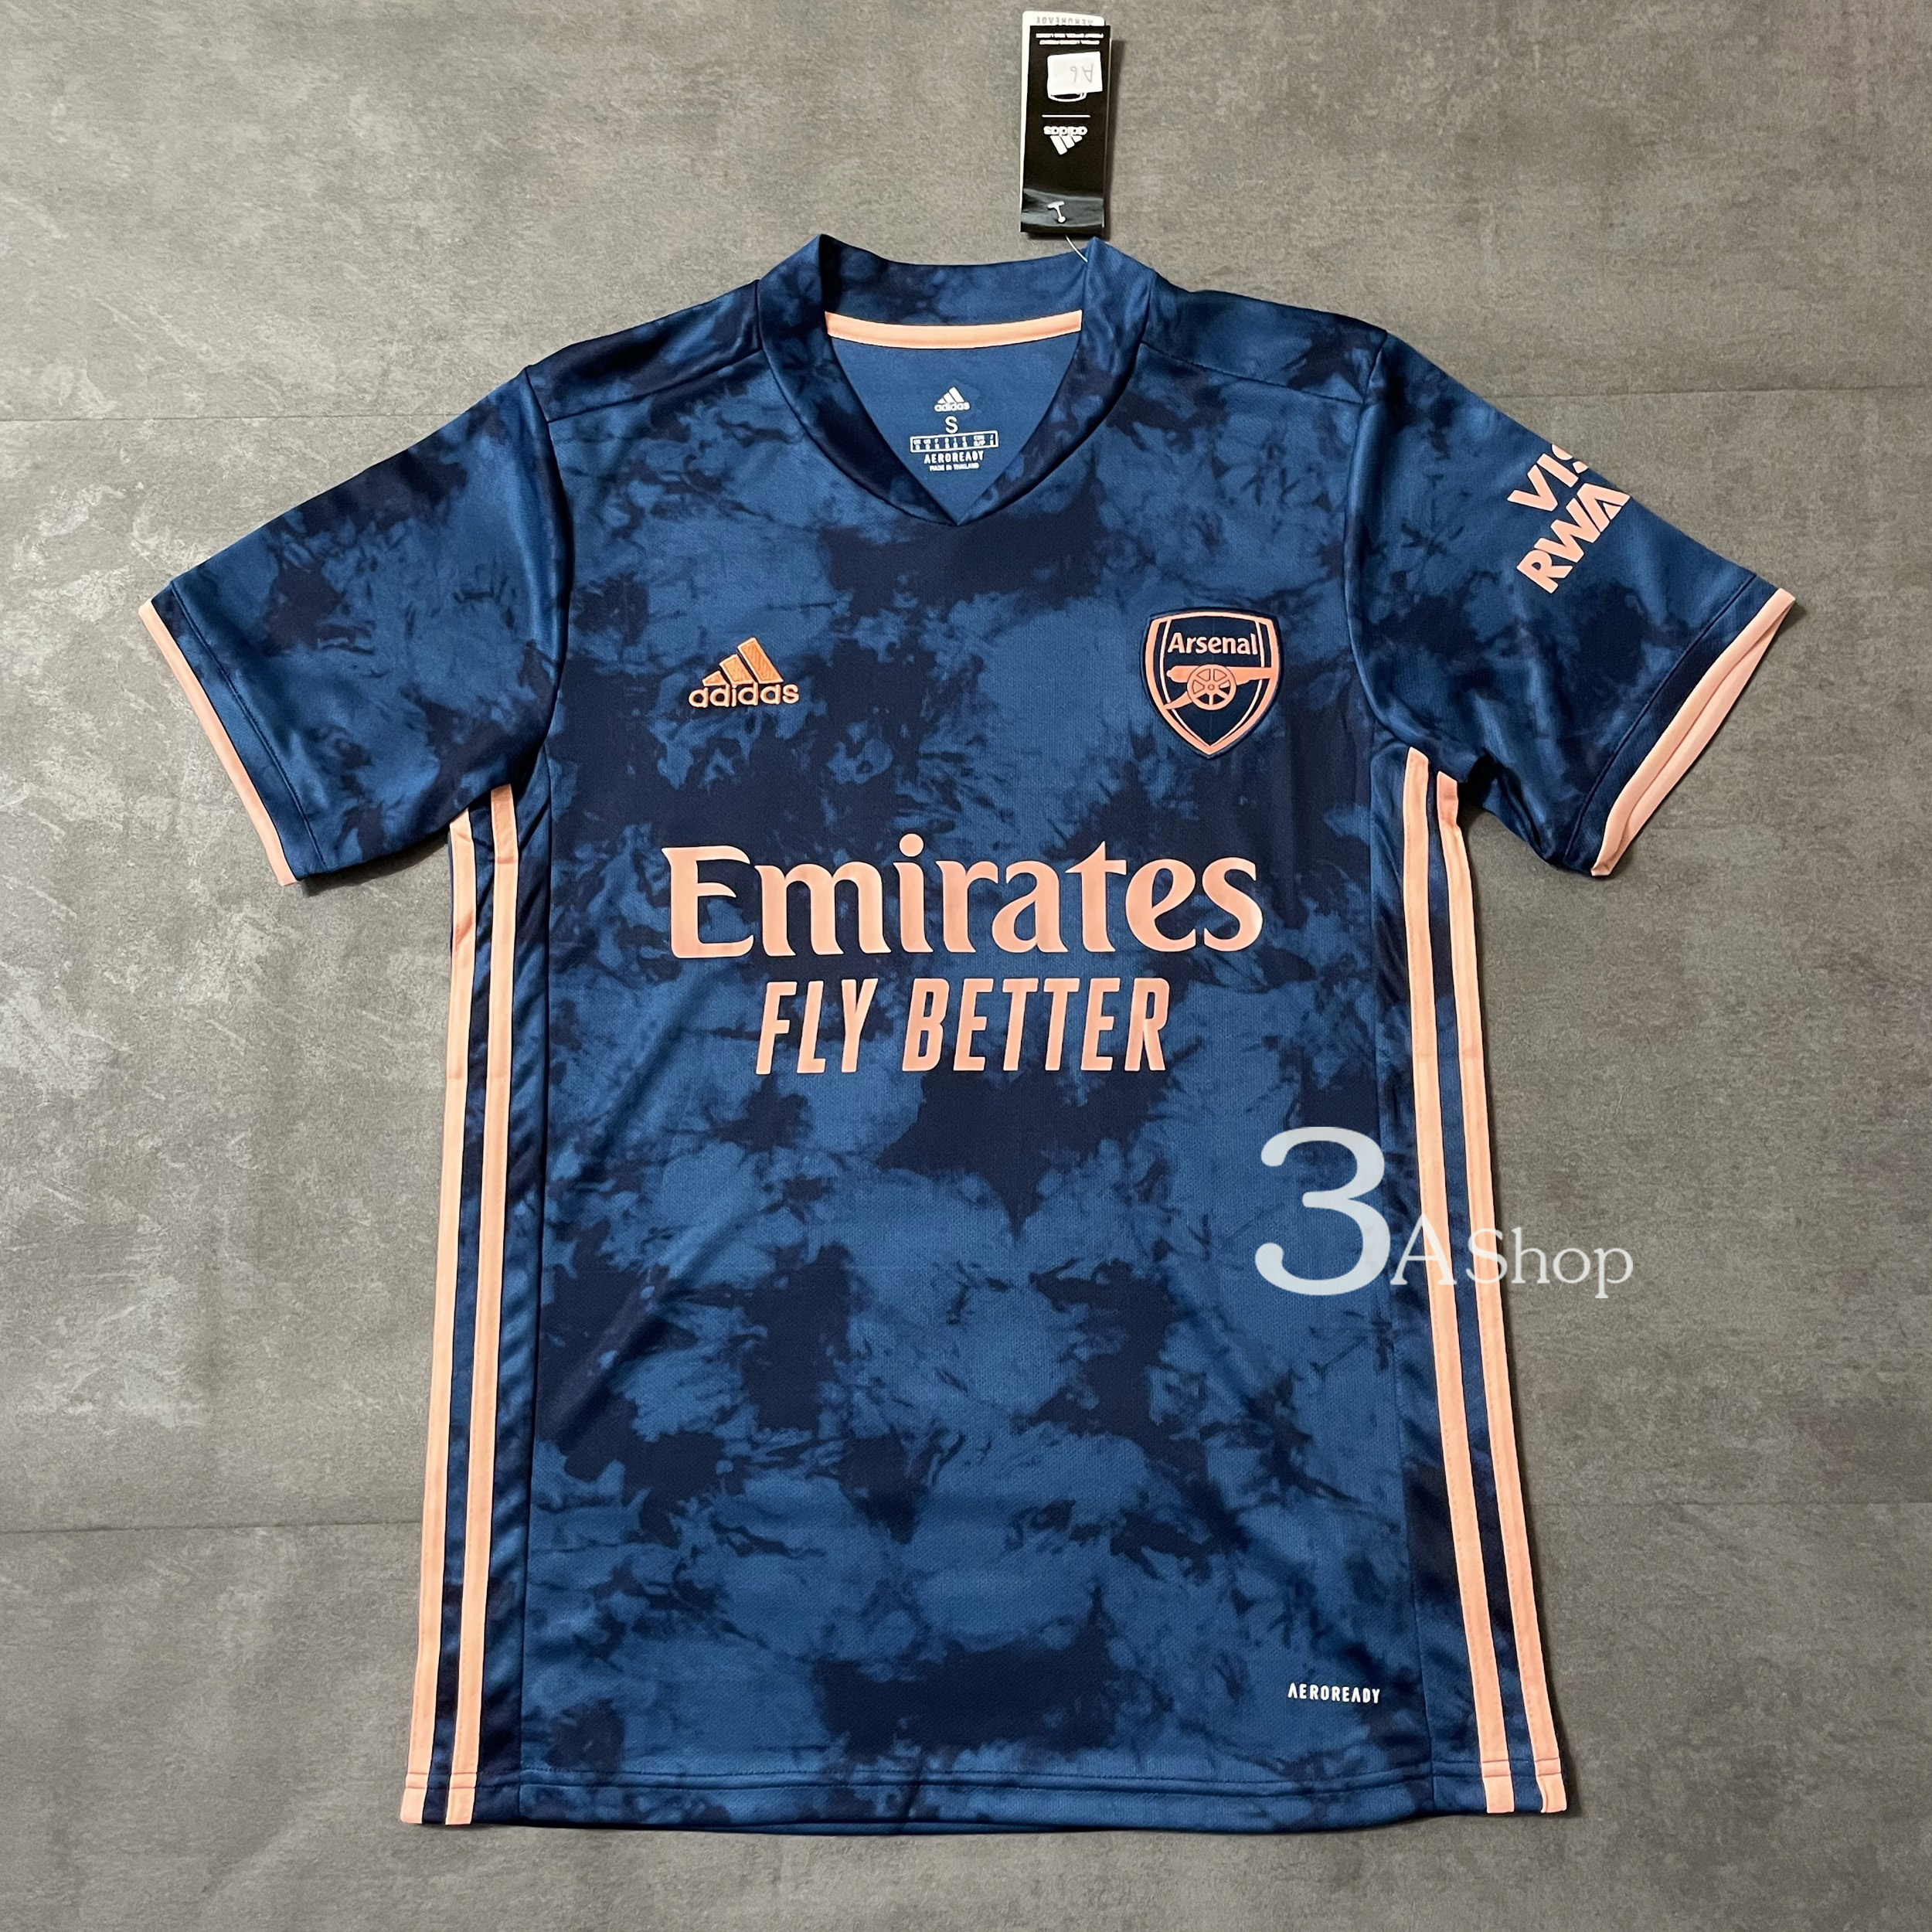 Arsenal 21 FOOTBALL SHIRT SOCCER  เสื้อบอล เสื้อฟุตบอลชาย เสื้อบอลชาย เสื้อฟุตบอล เสื้อกีฬาชาย2021 เสื้อทีมอาเซนอล ปี21 เกรด 3A